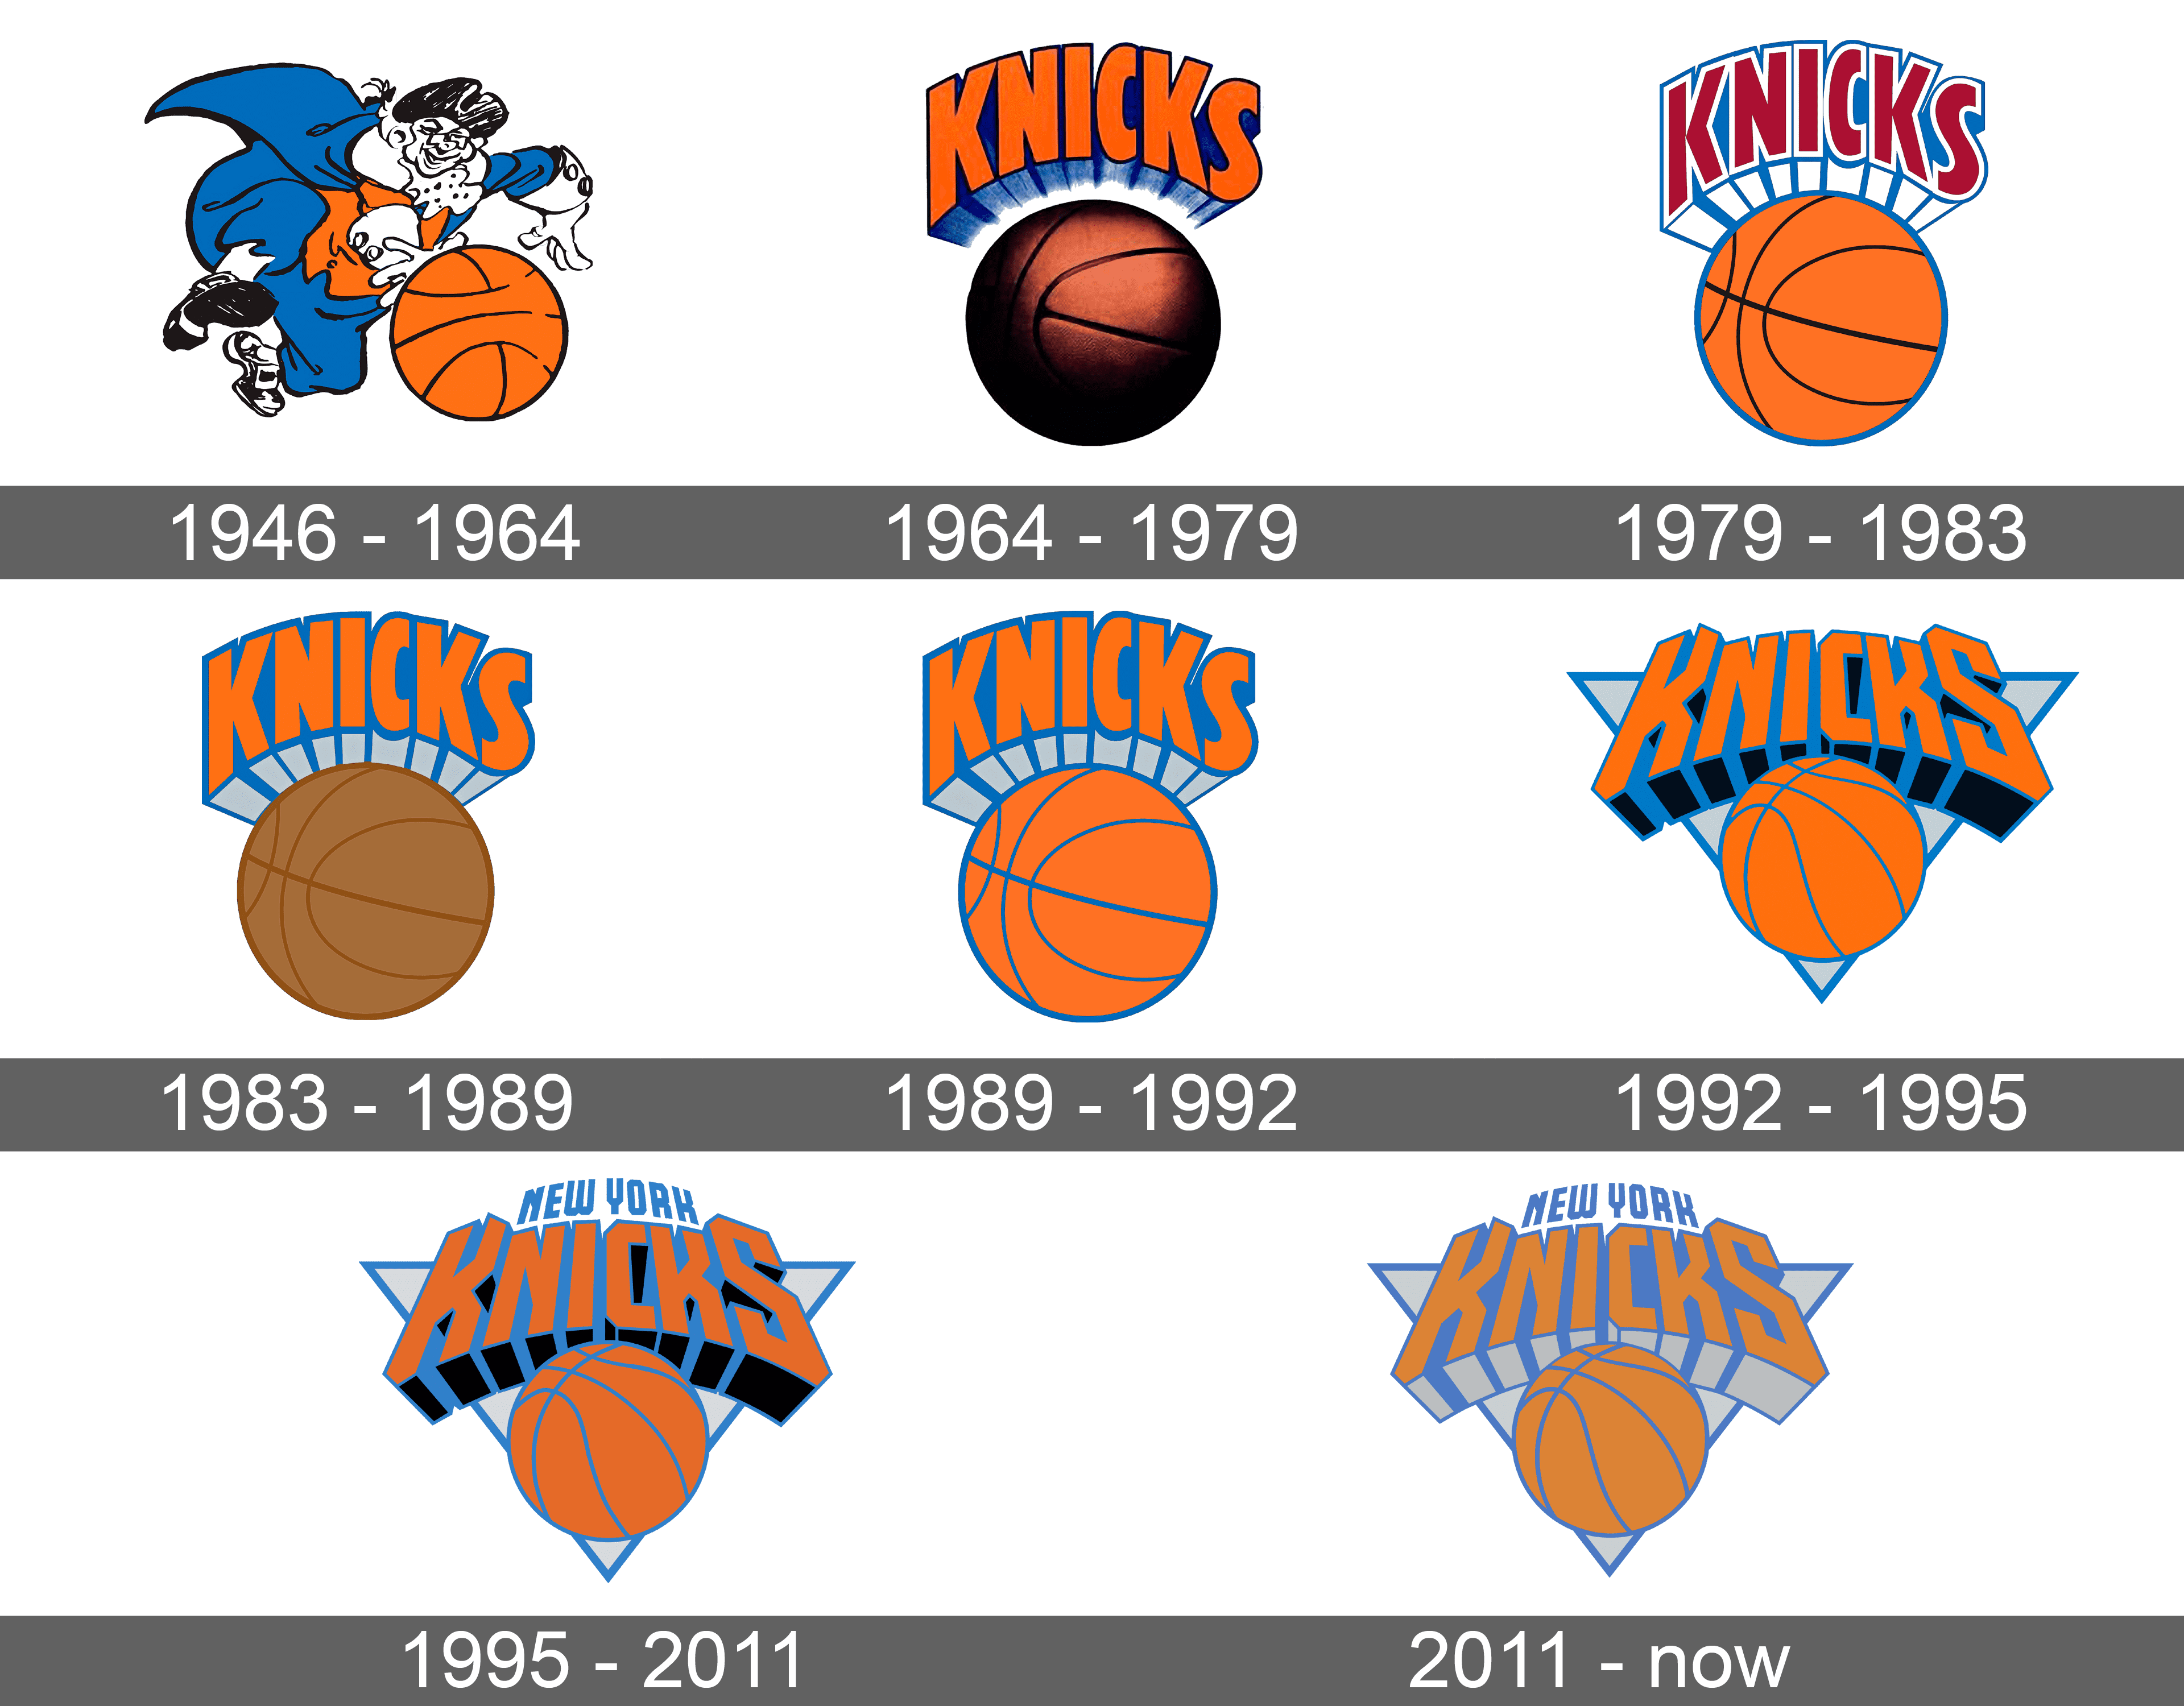 Knicks Logo Png We Have 3 Free New York Knicks Vector - vrogue.co